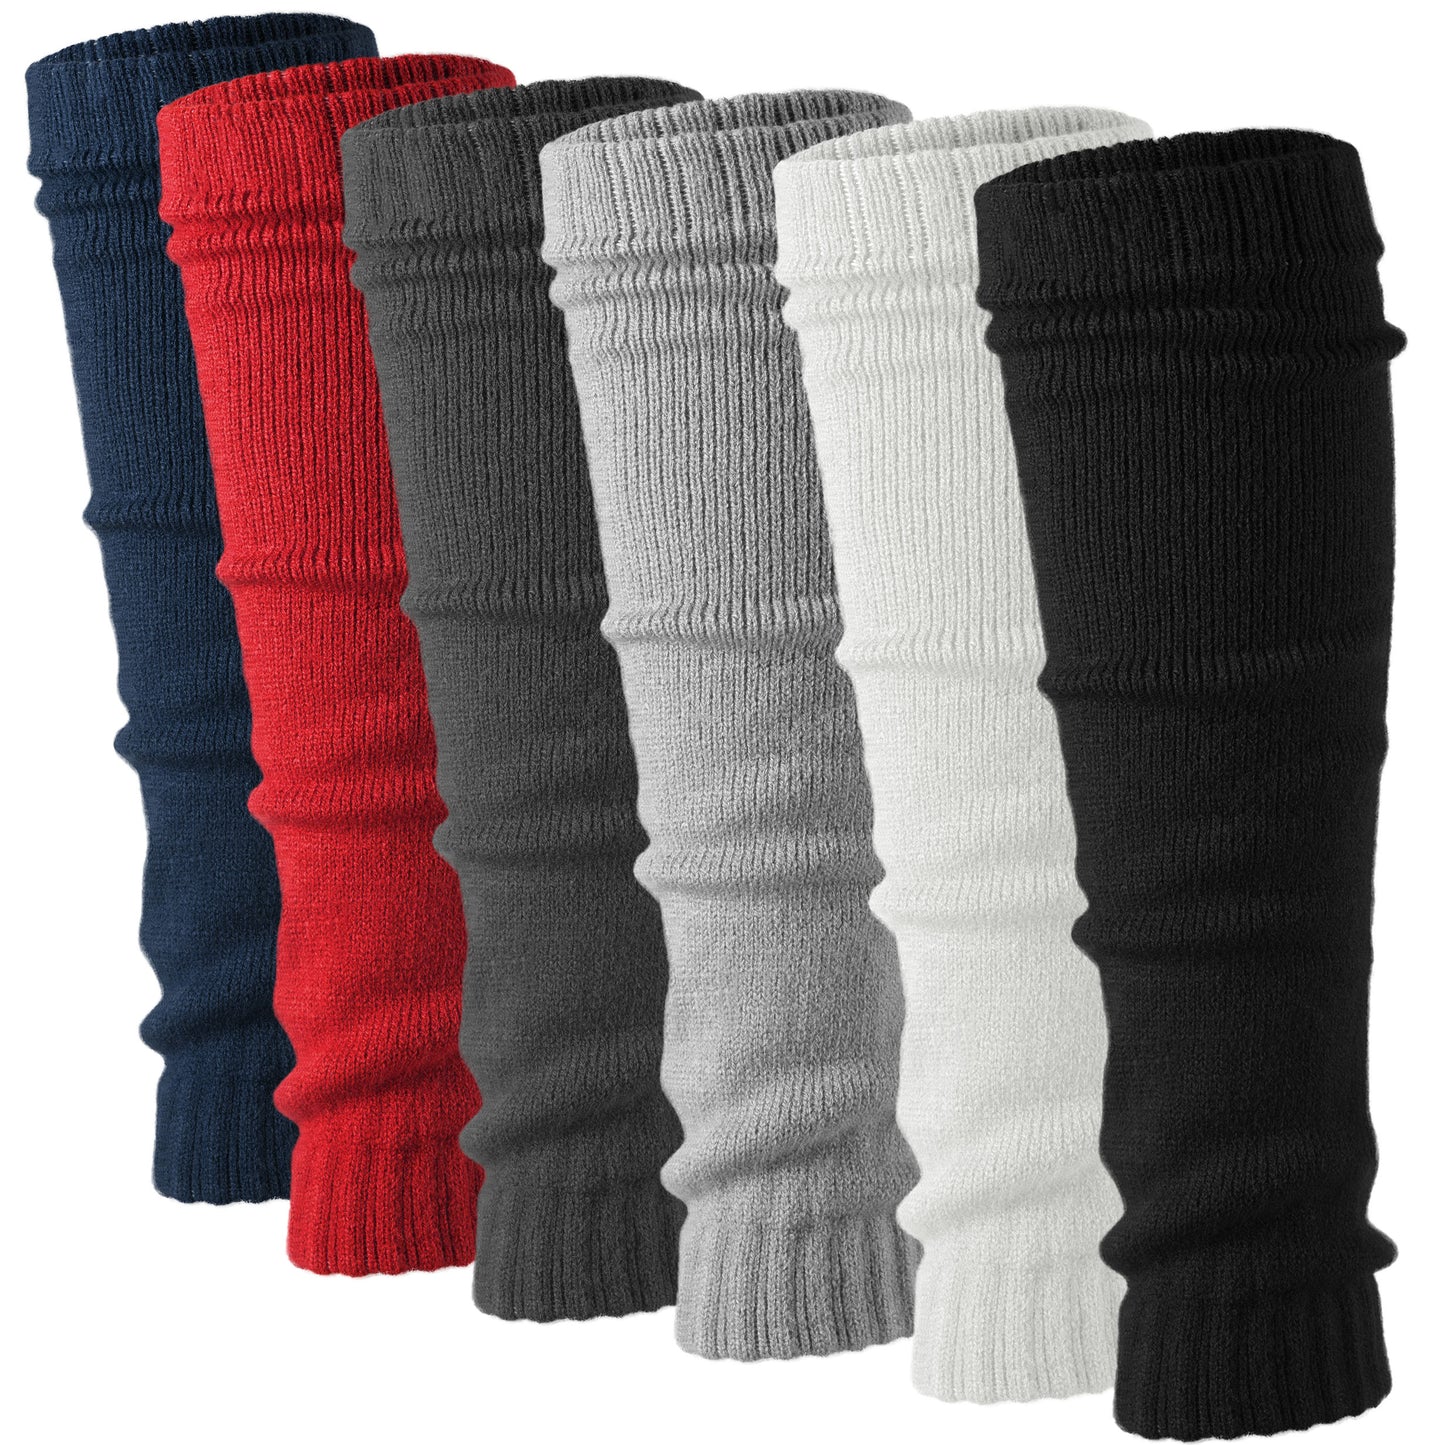 Knit Leg Warmers - 6 Pairs